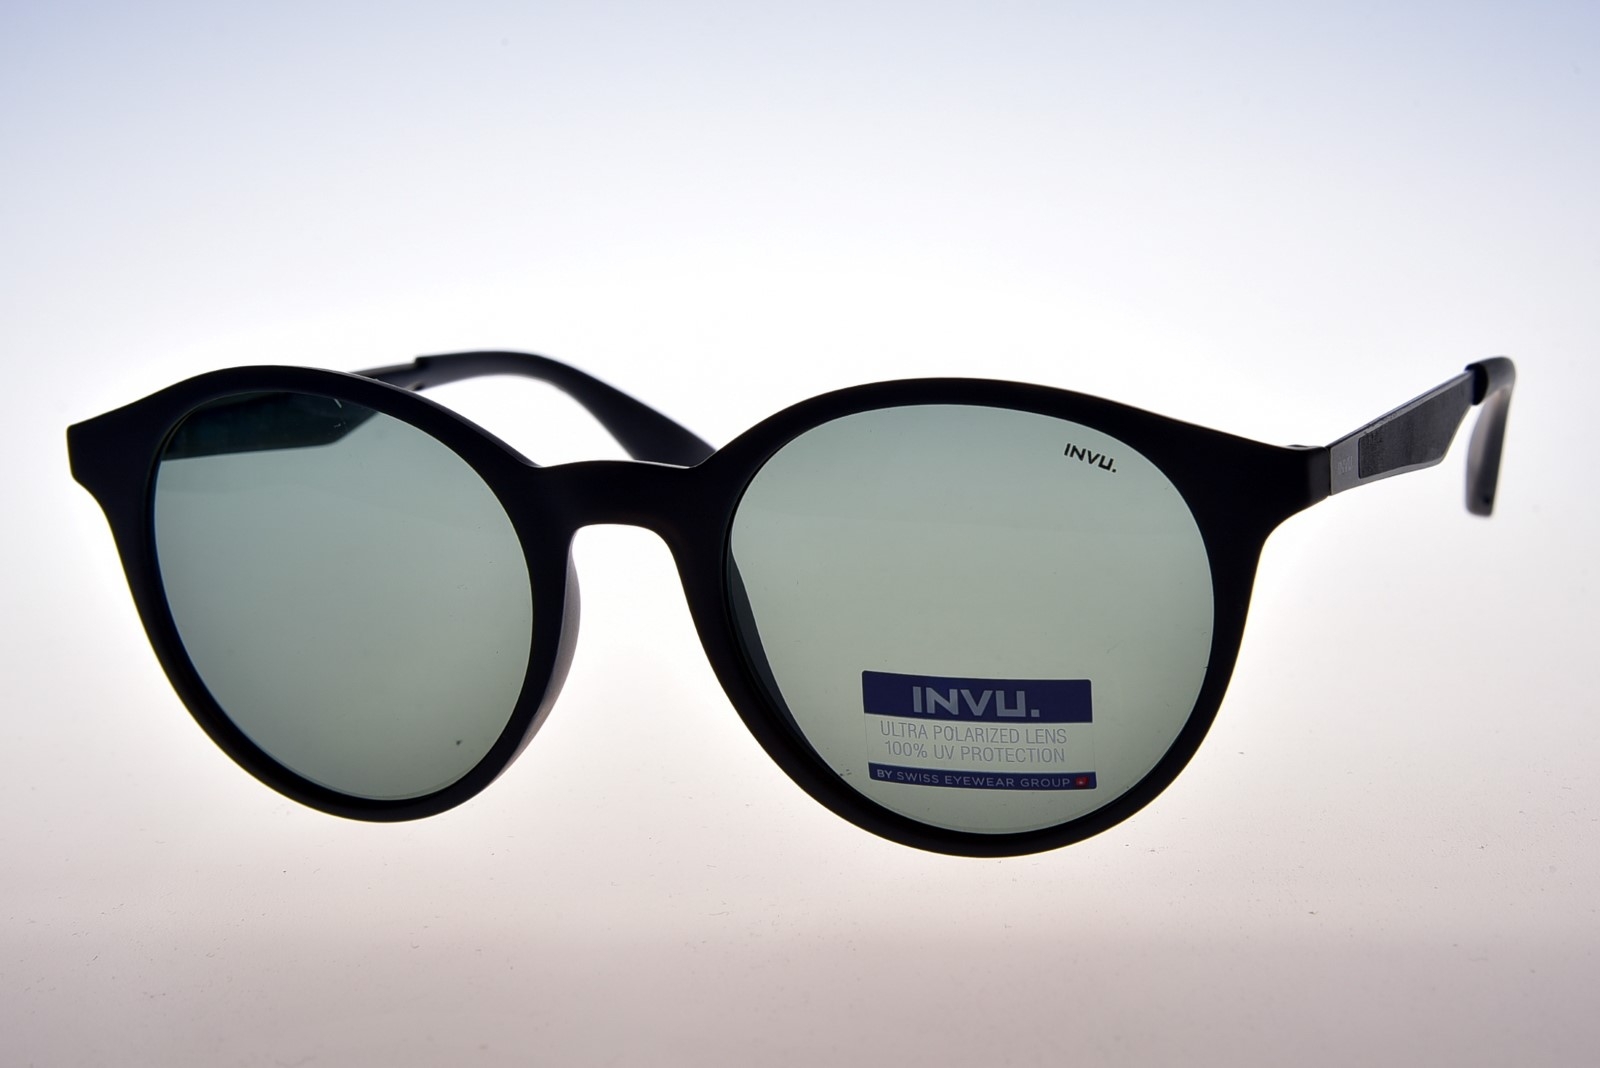 INVU. B2002A - Unisex slnečné okuliare